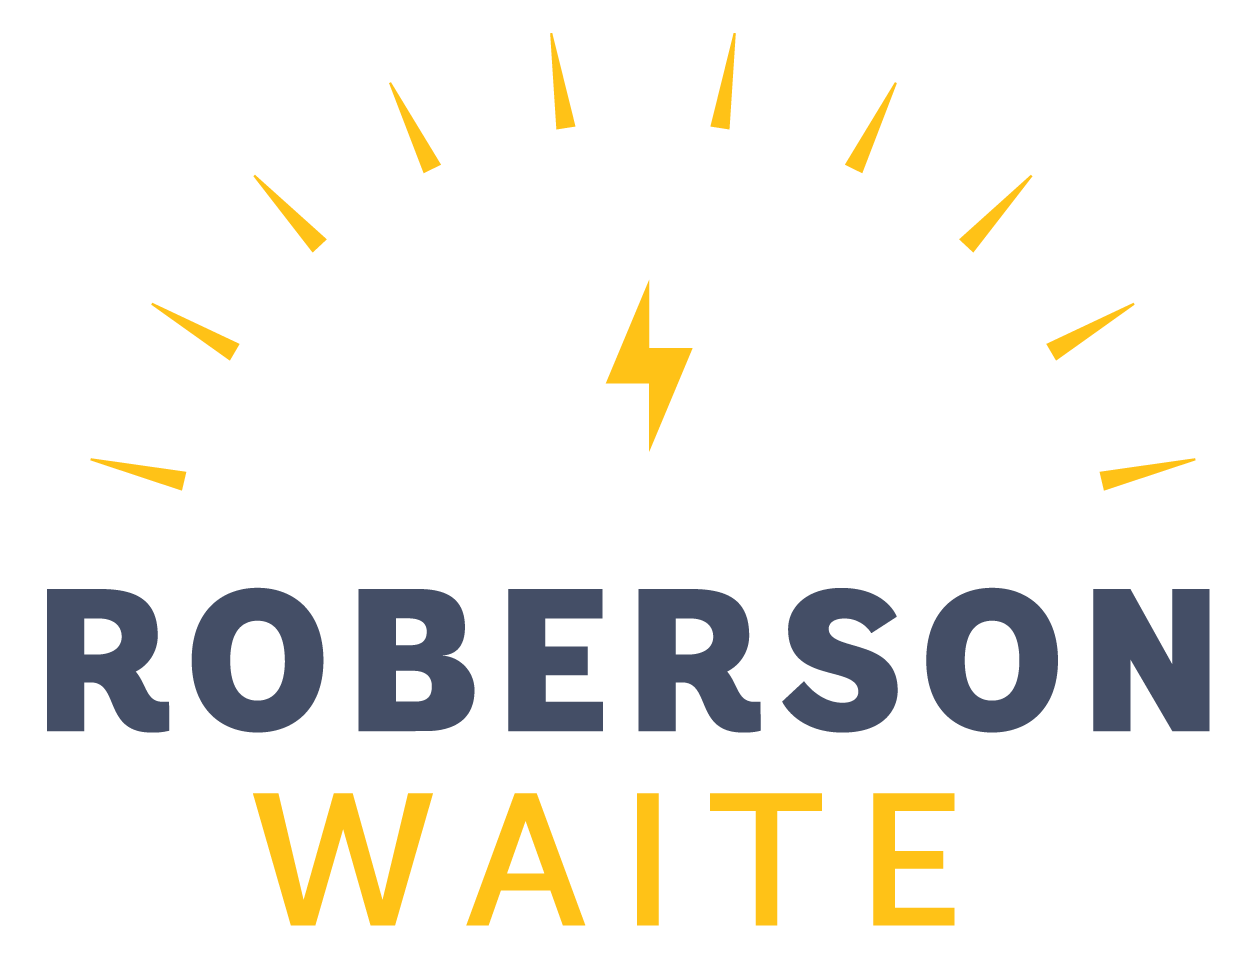 Roberson Waite